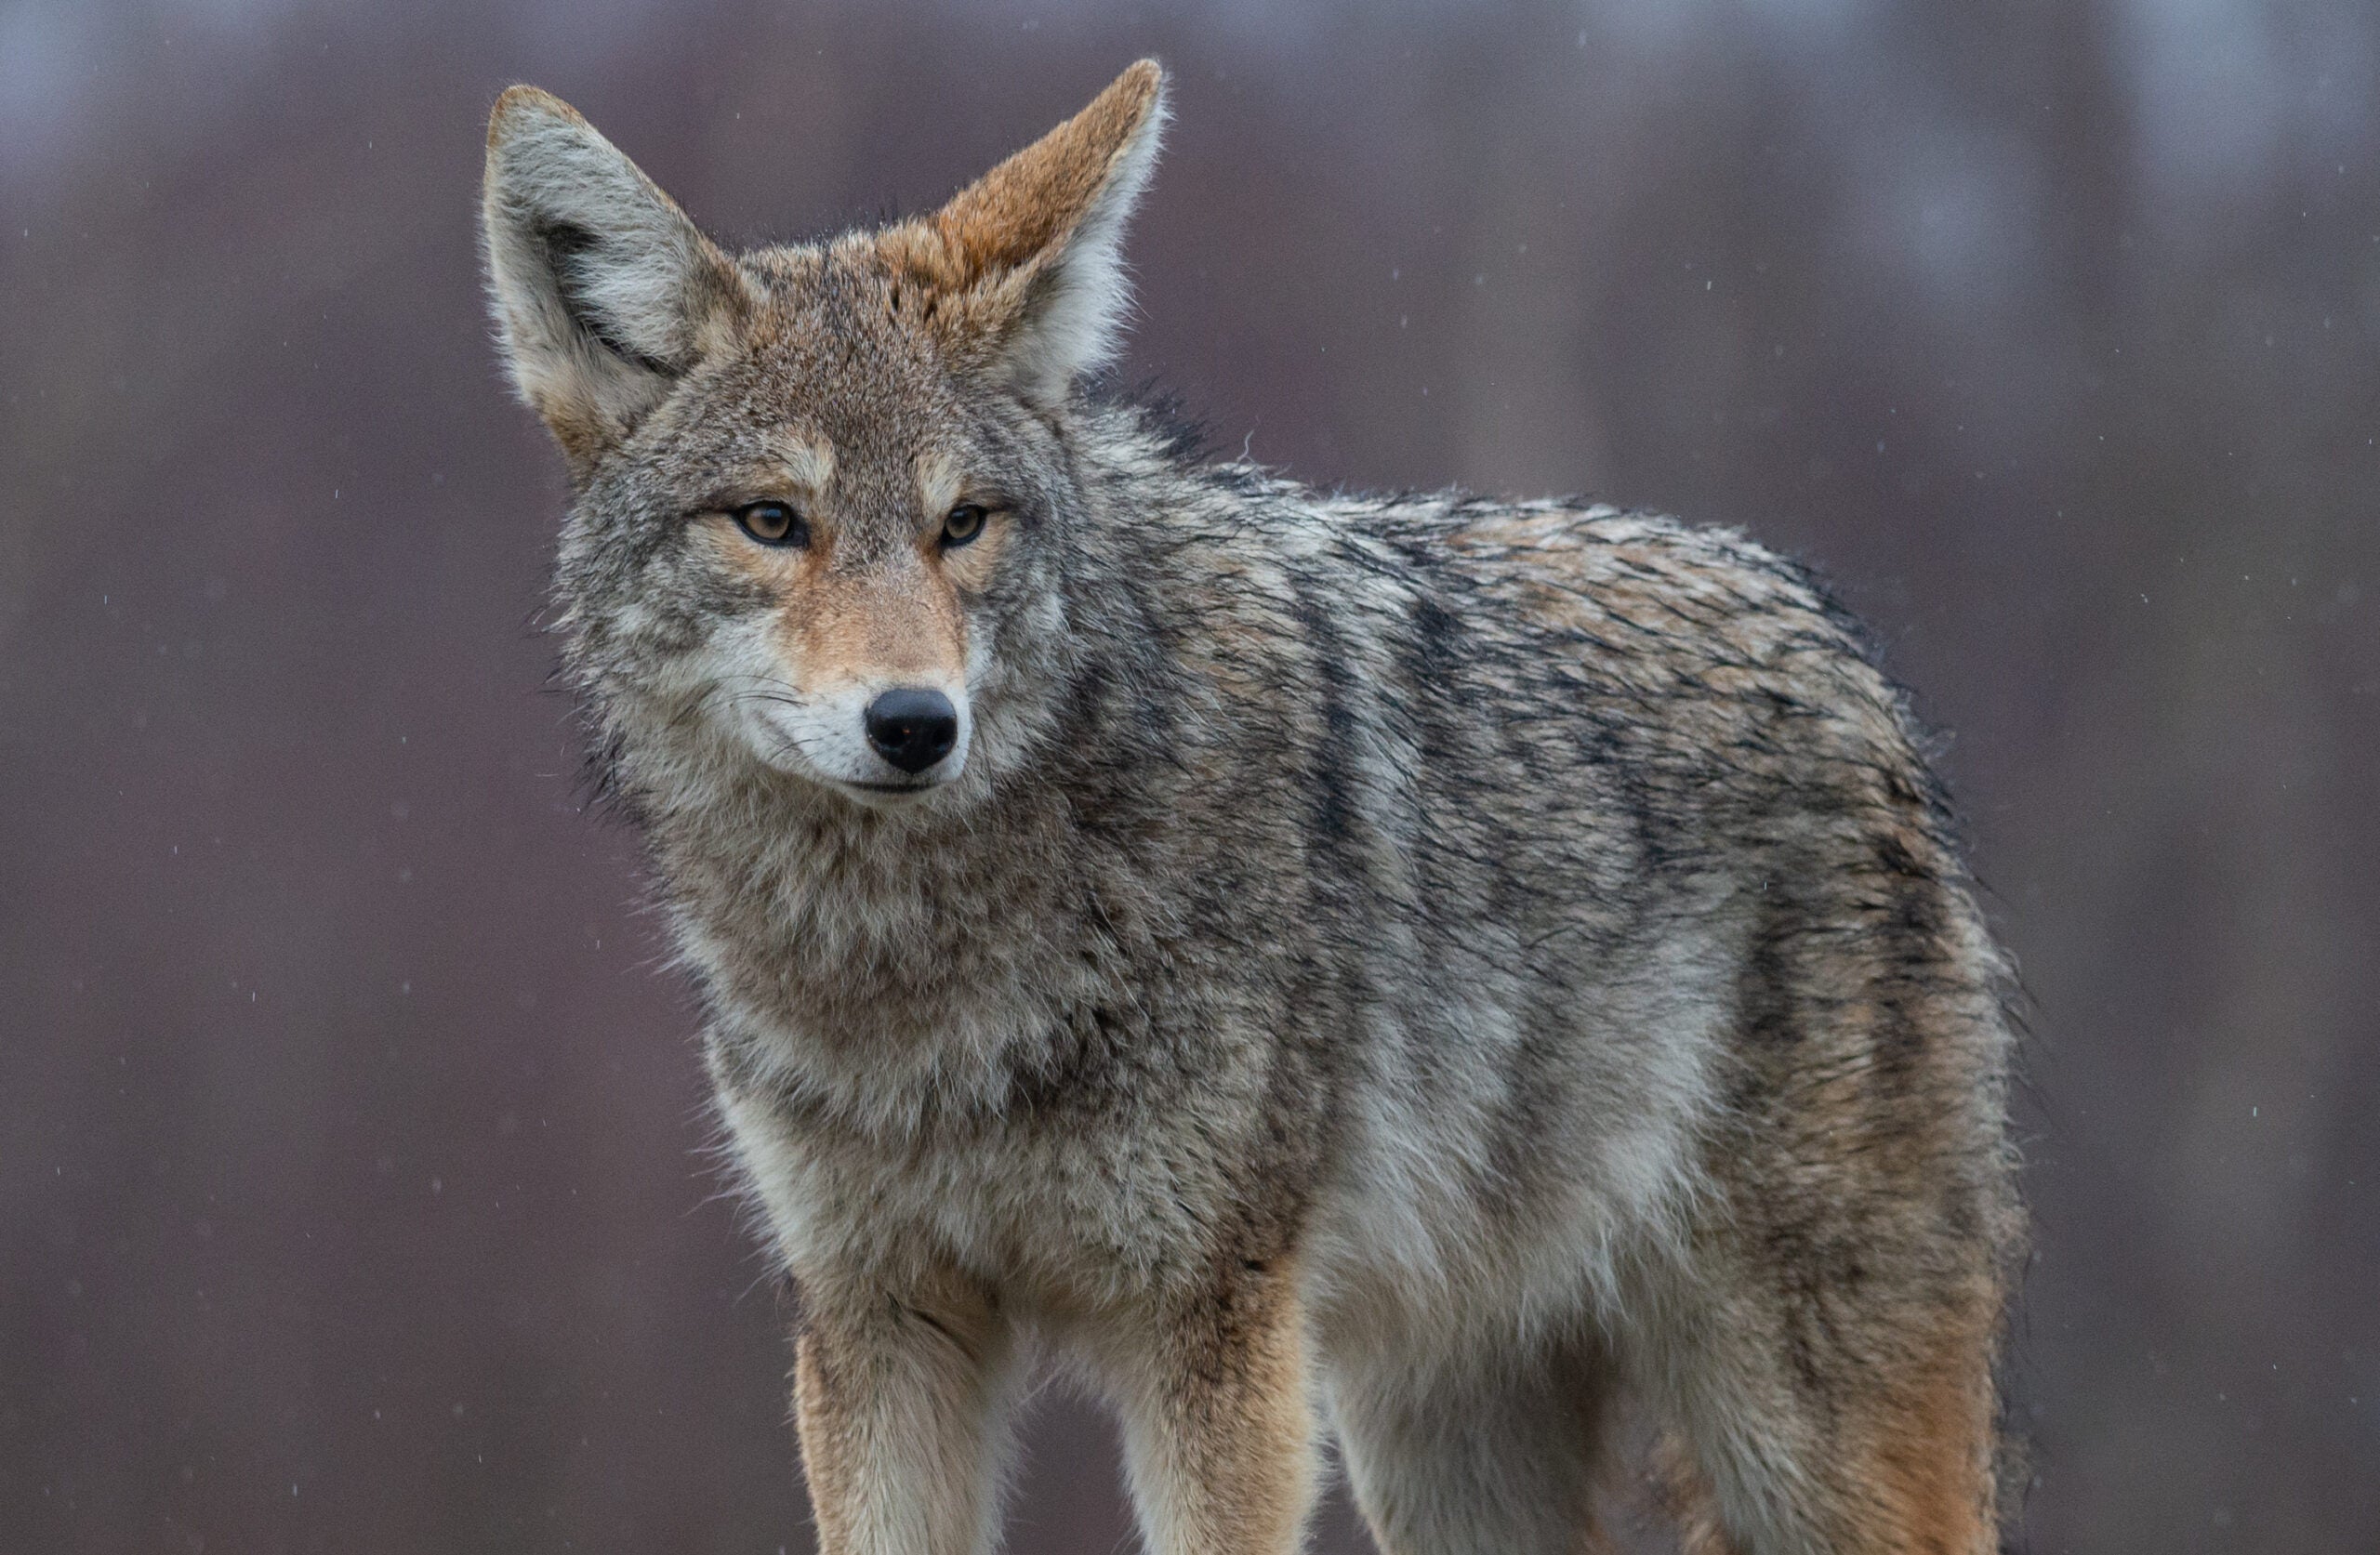 a coyote responds the a prey-in-distress call